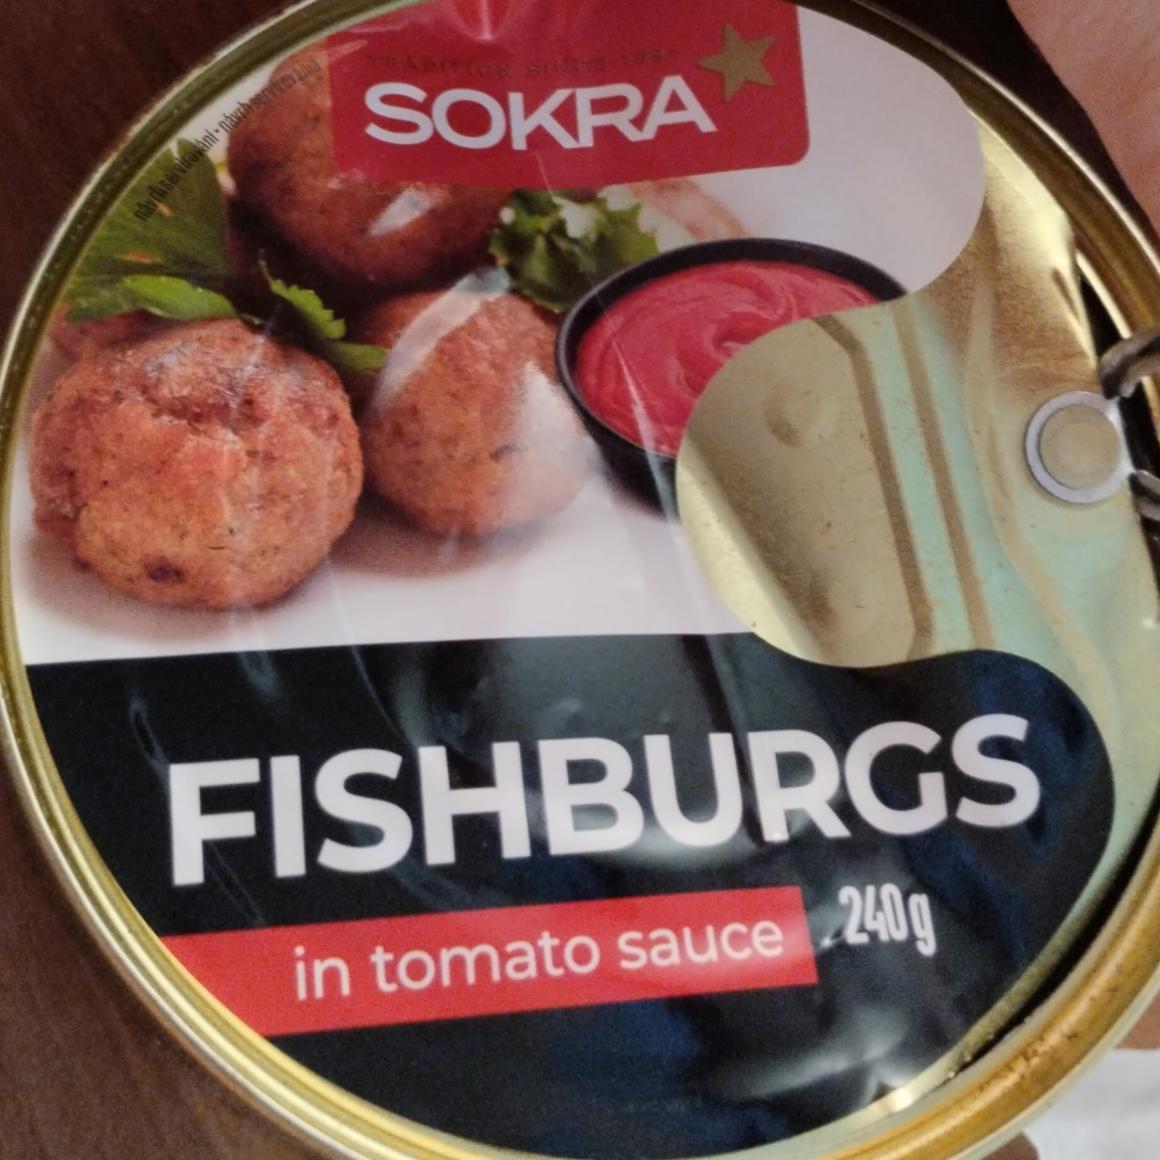 Фото - Fishburgs in Tomato sauce Sokra